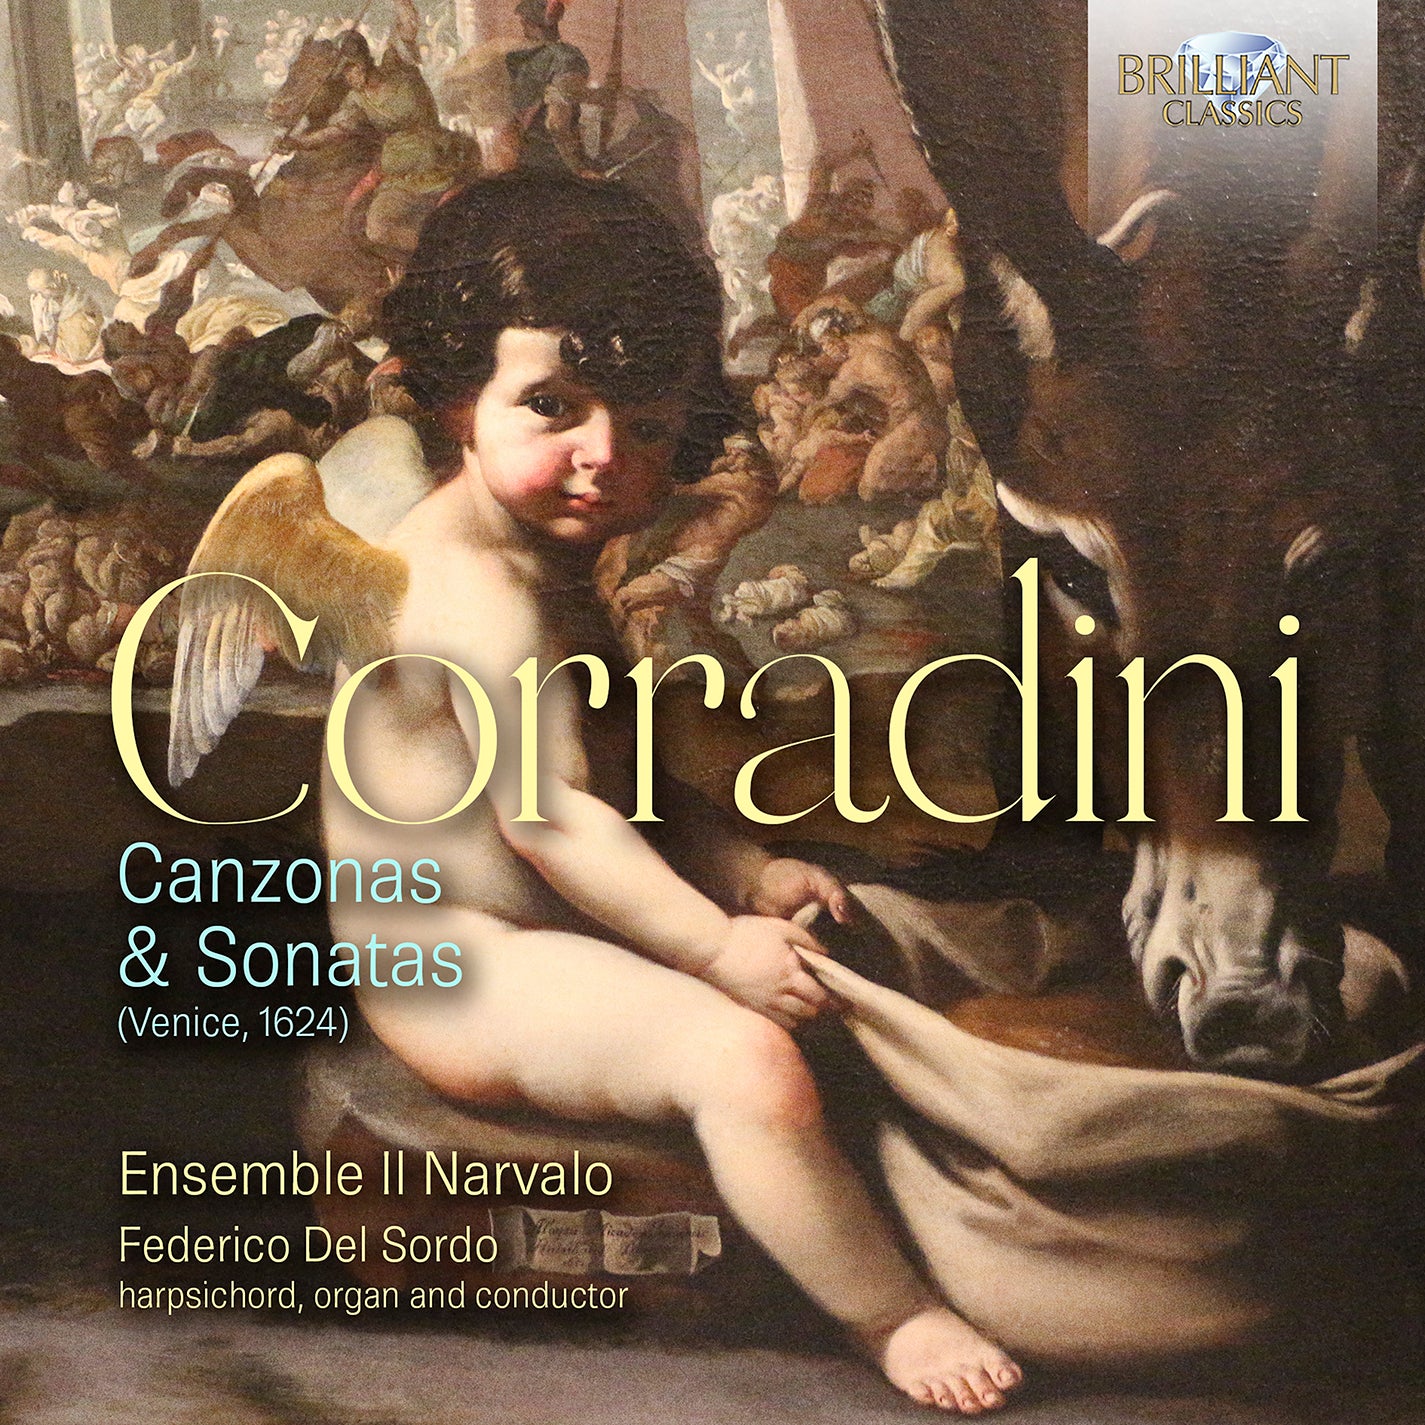 Corradini: Canzonas & Sonatas